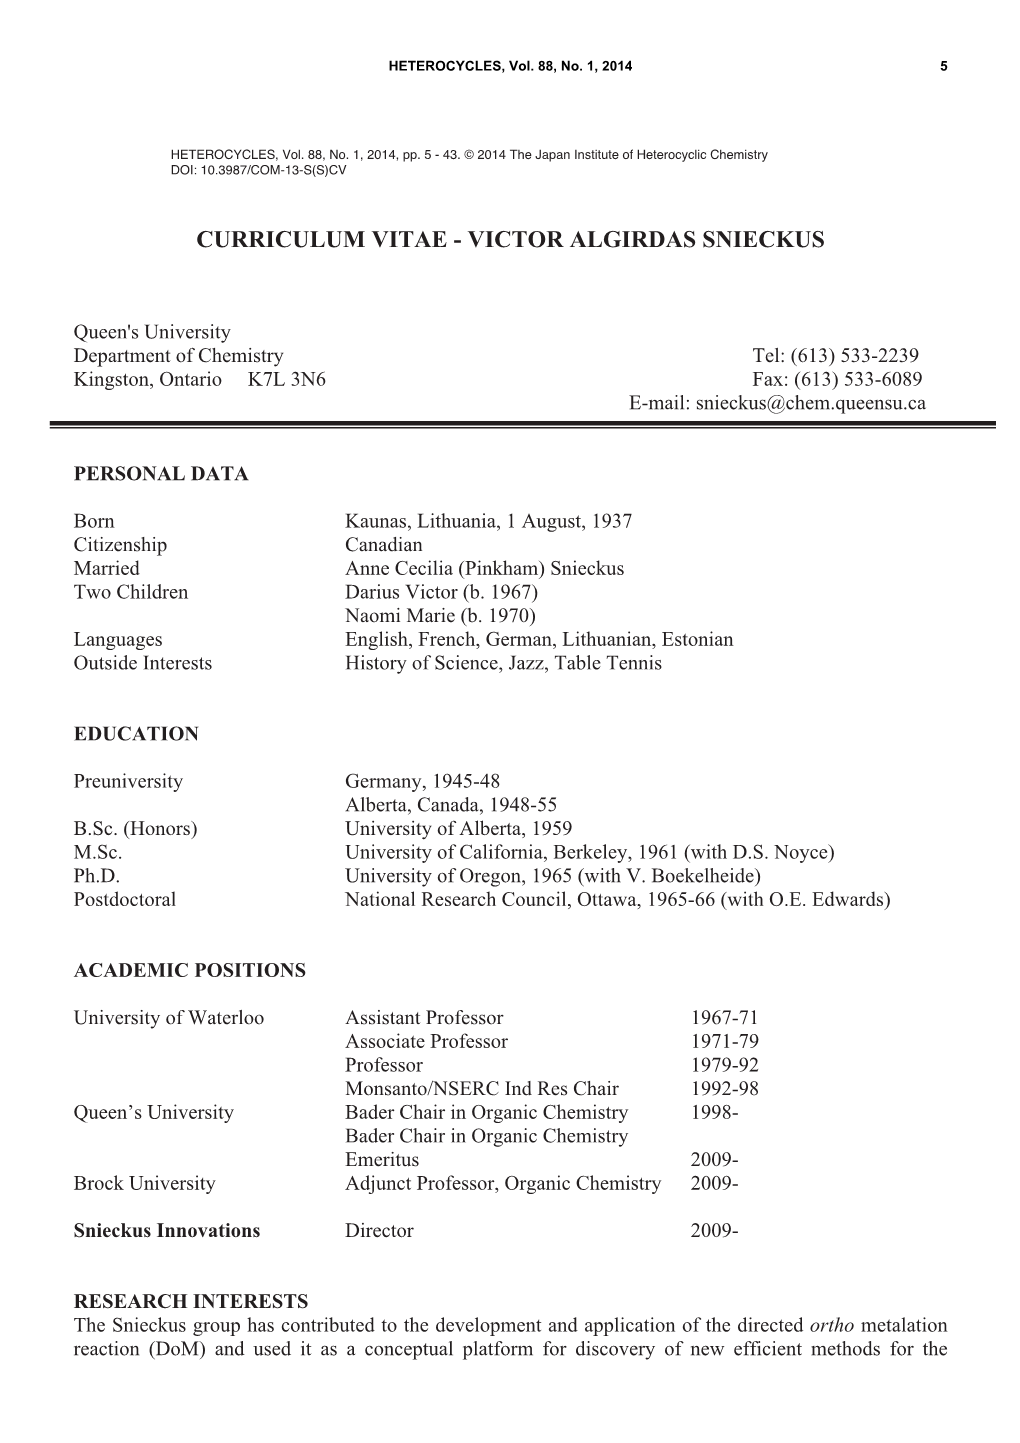 Curriculum Vitae - Victor Algirdas Snieckus